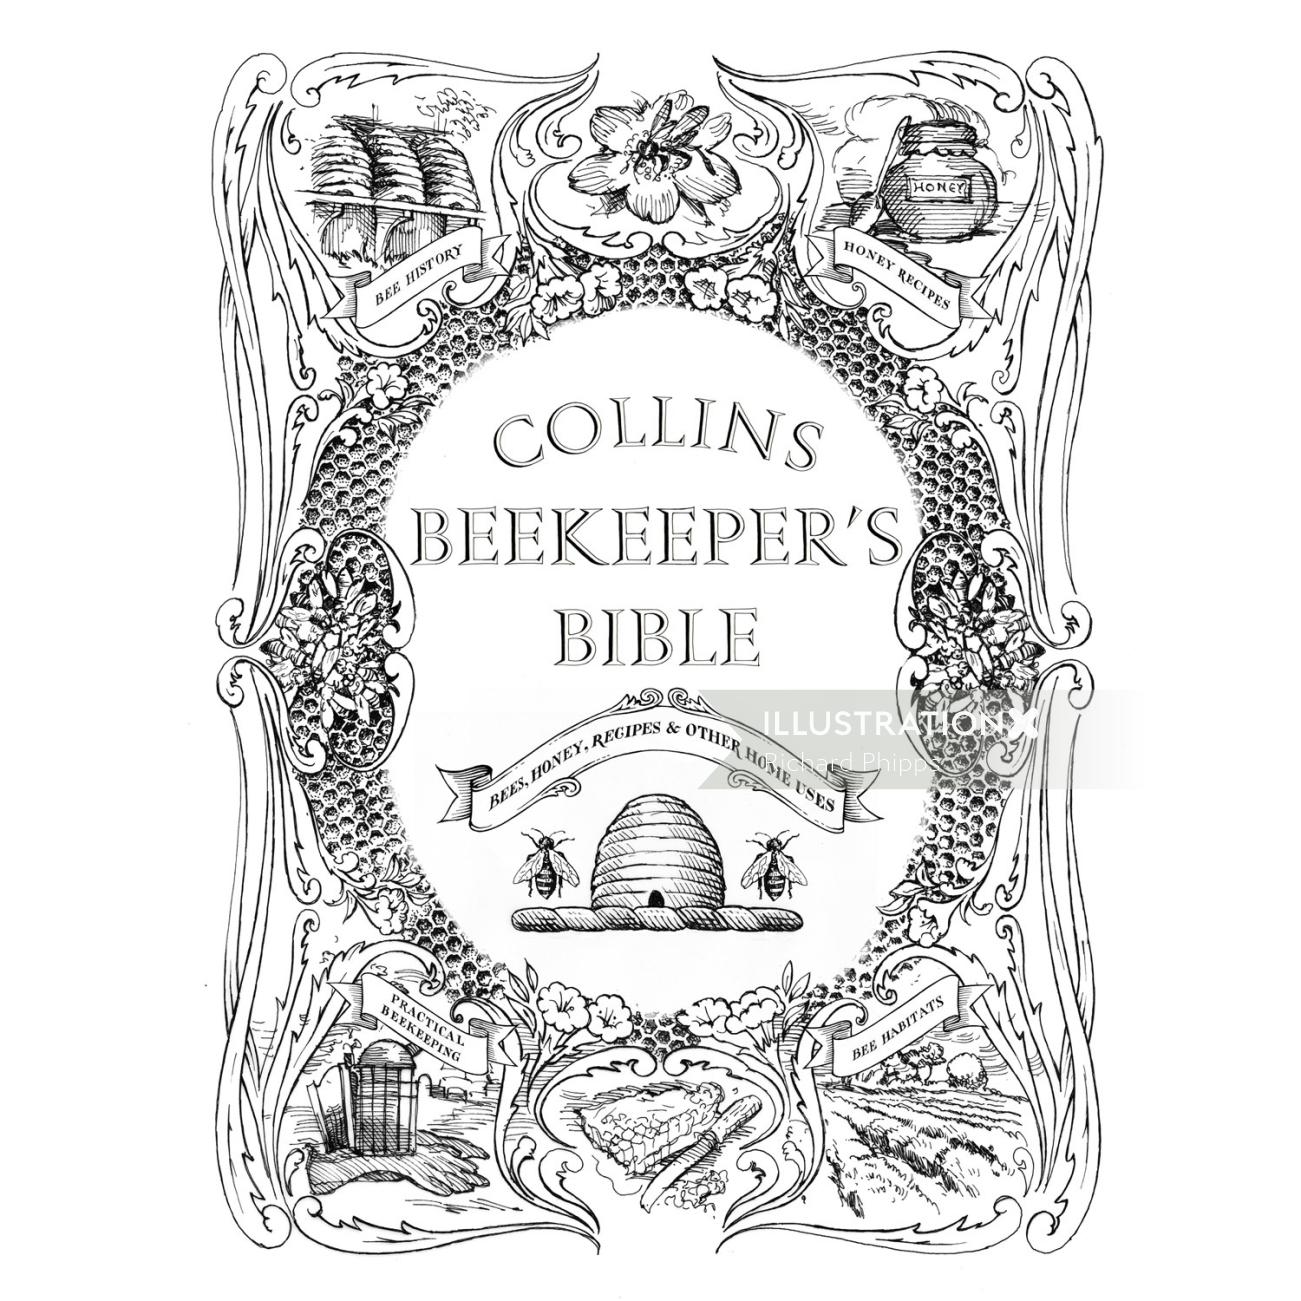 The Beekeepers Bible book jacket
